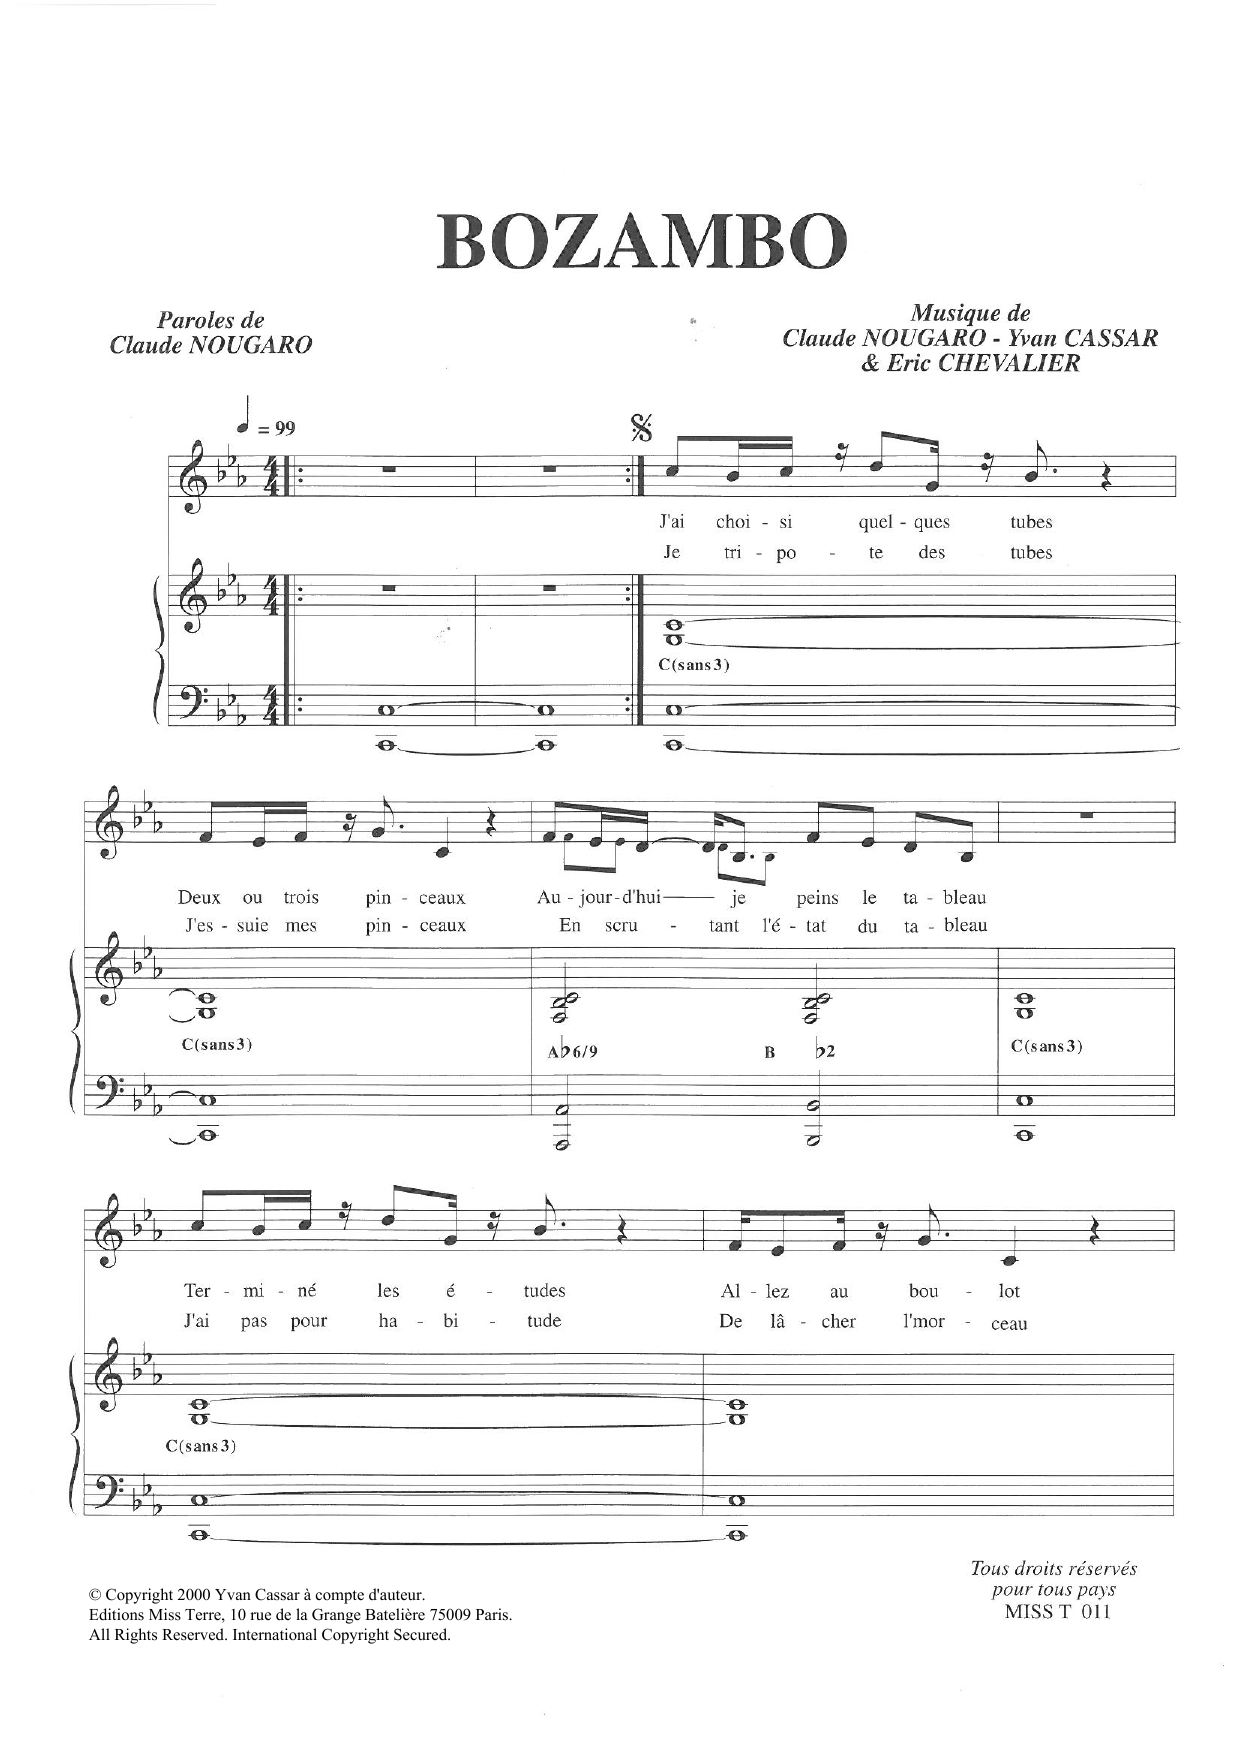 Claude Nougaro Bozambo Sheet Music Notes & Chords for Piano & Vocal - Download or Print PDF